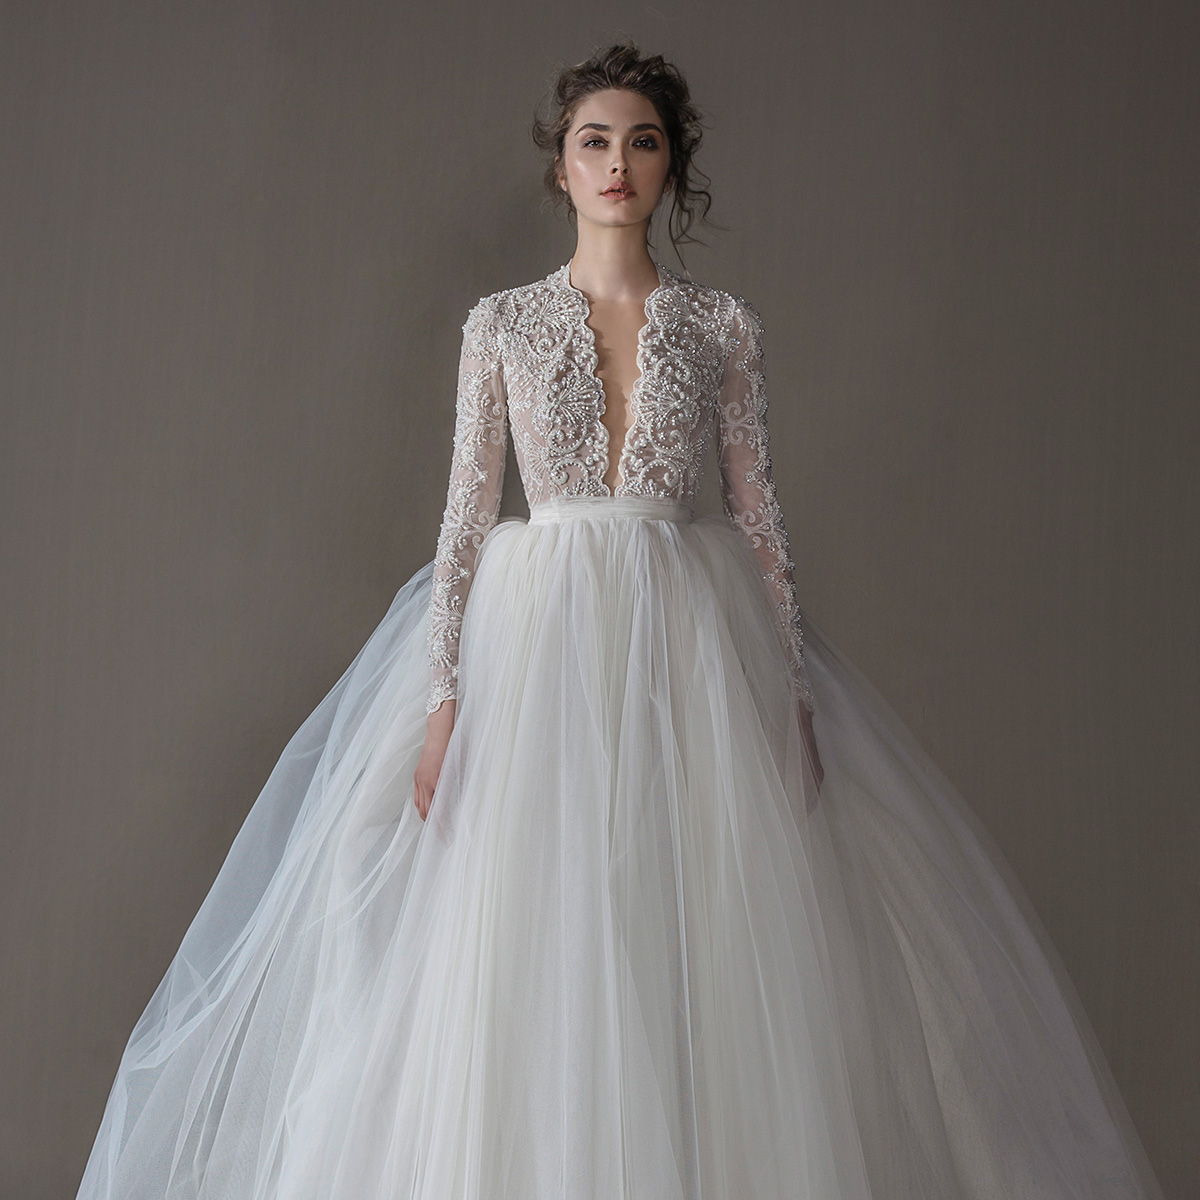 Julie Vino 2020 Couture Wedding Dresses — “Dream” Bridal Collection ...